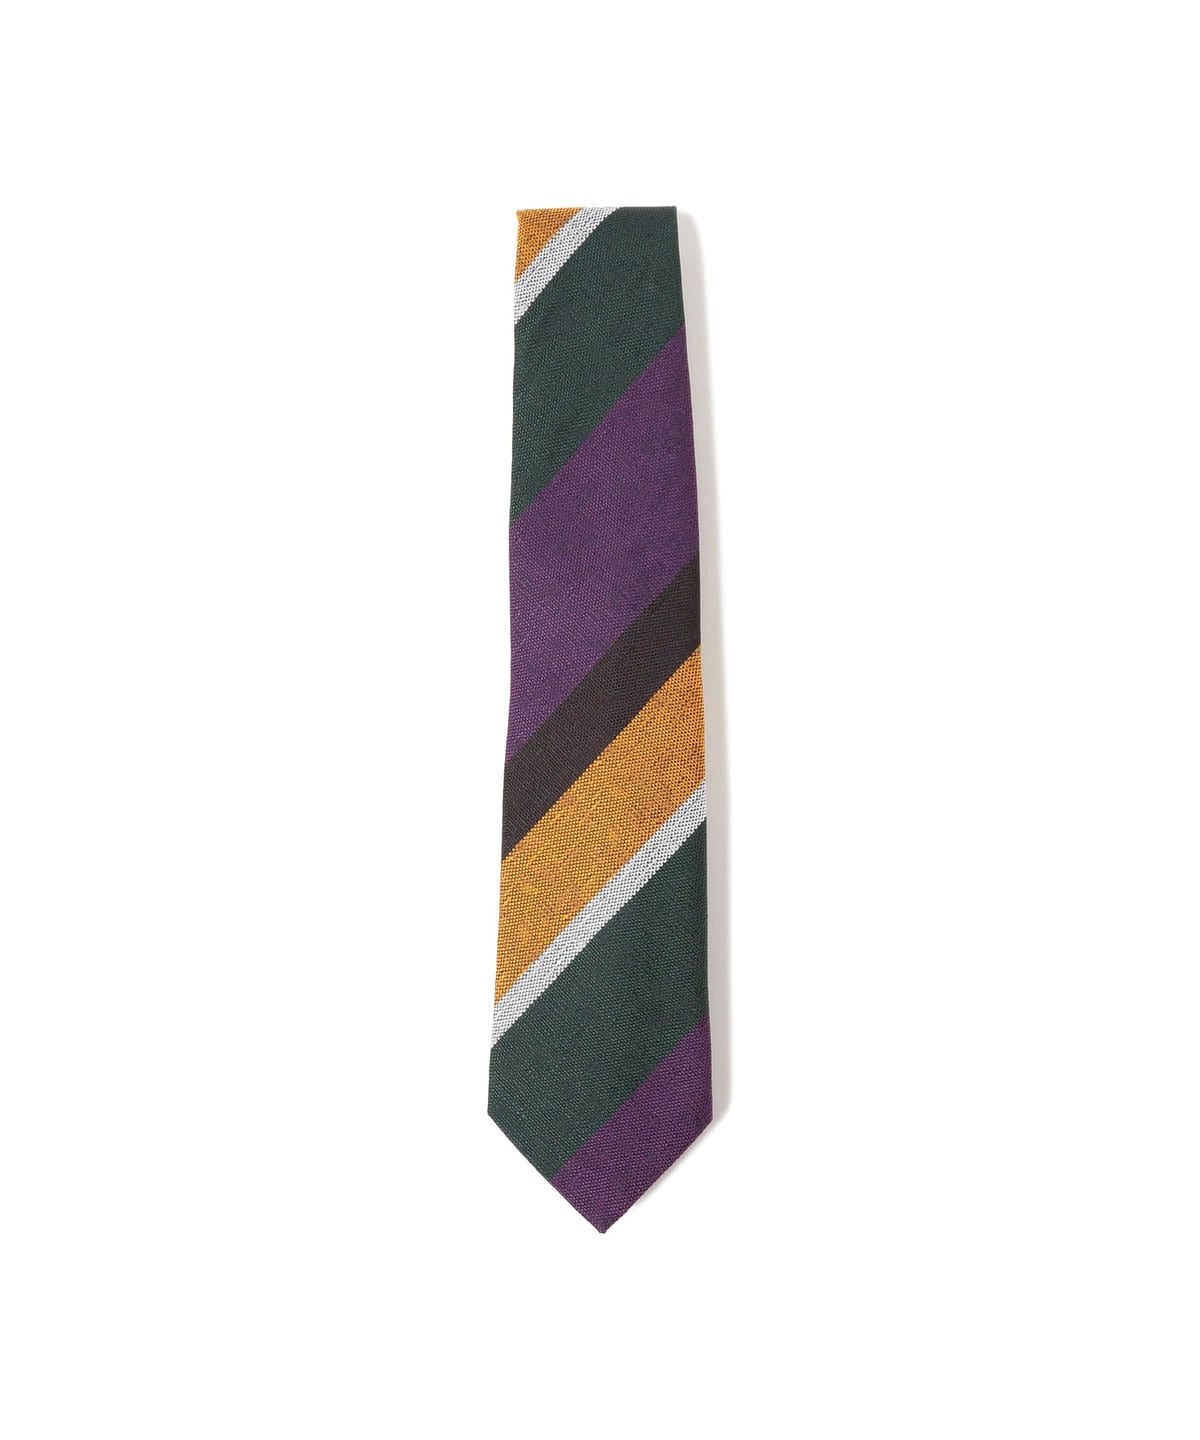 BEAMS F Seaward & Stearn BEAMS Striped necktie (suit/tie) mail